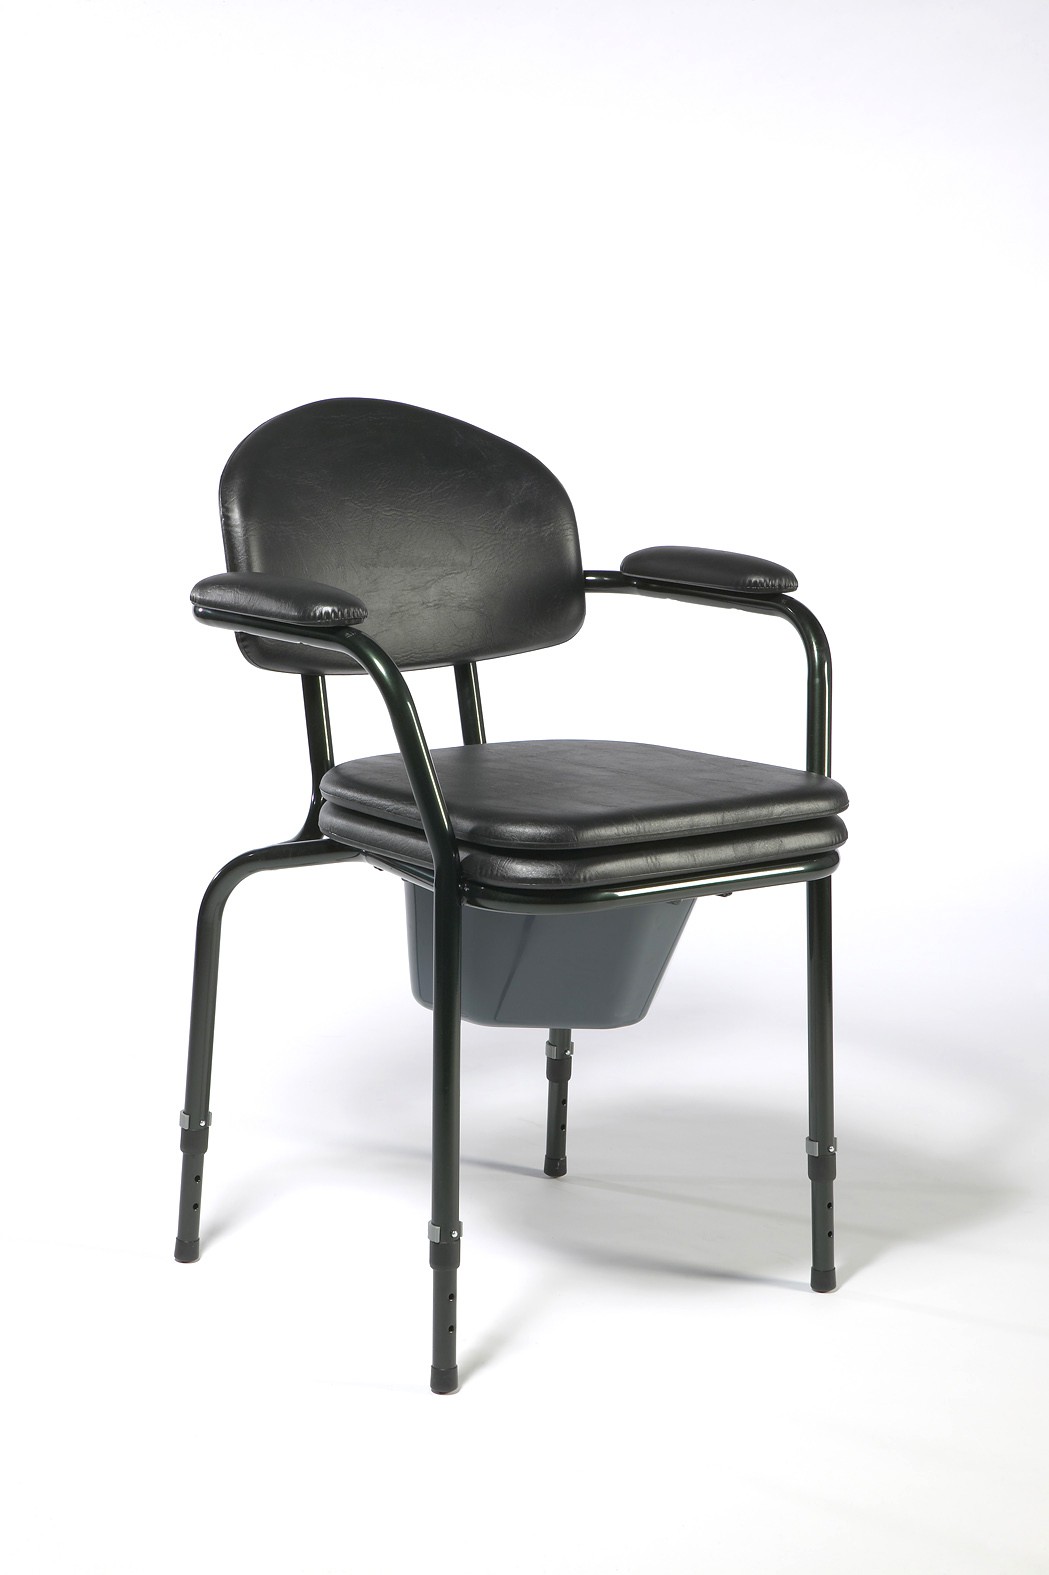 Krzesło toaletowe model 9063